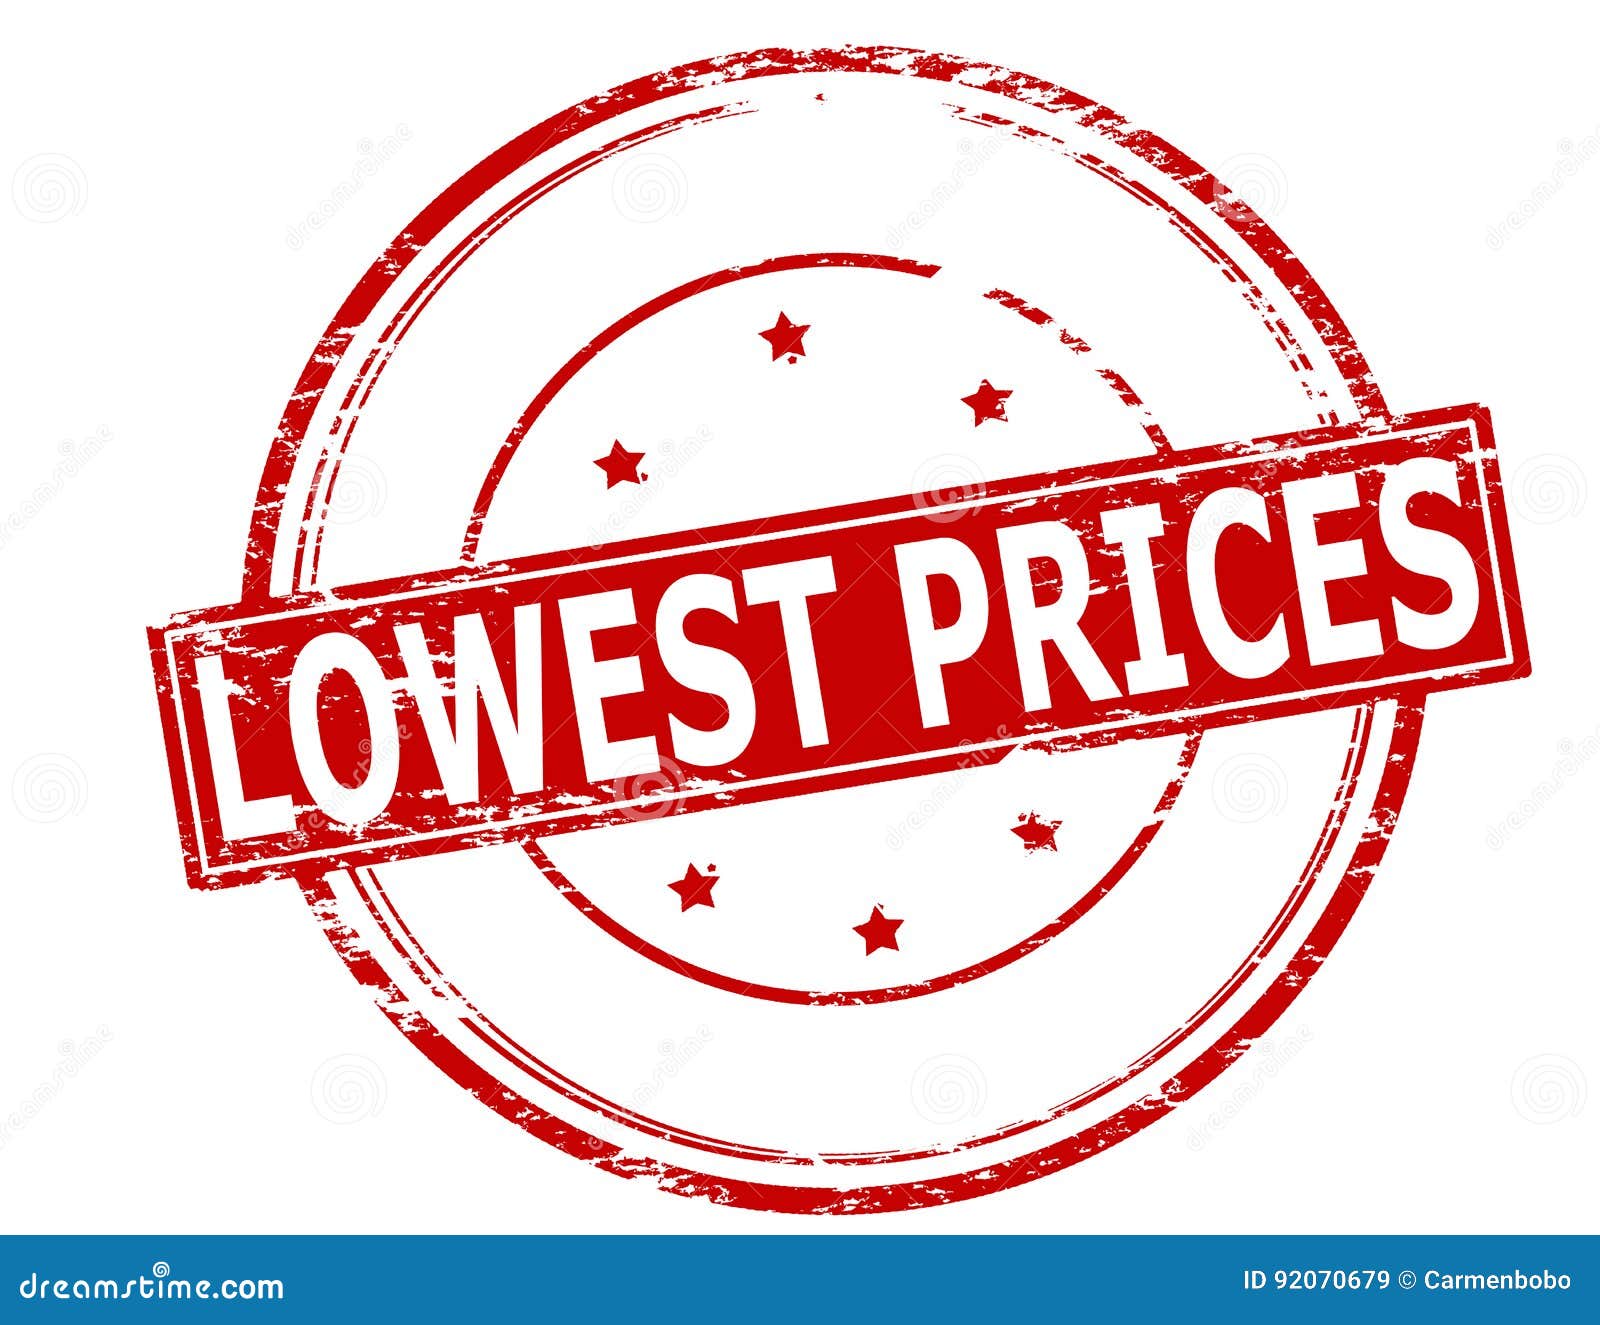 Lowest prices stock illustration. Illustration of last - 92070679